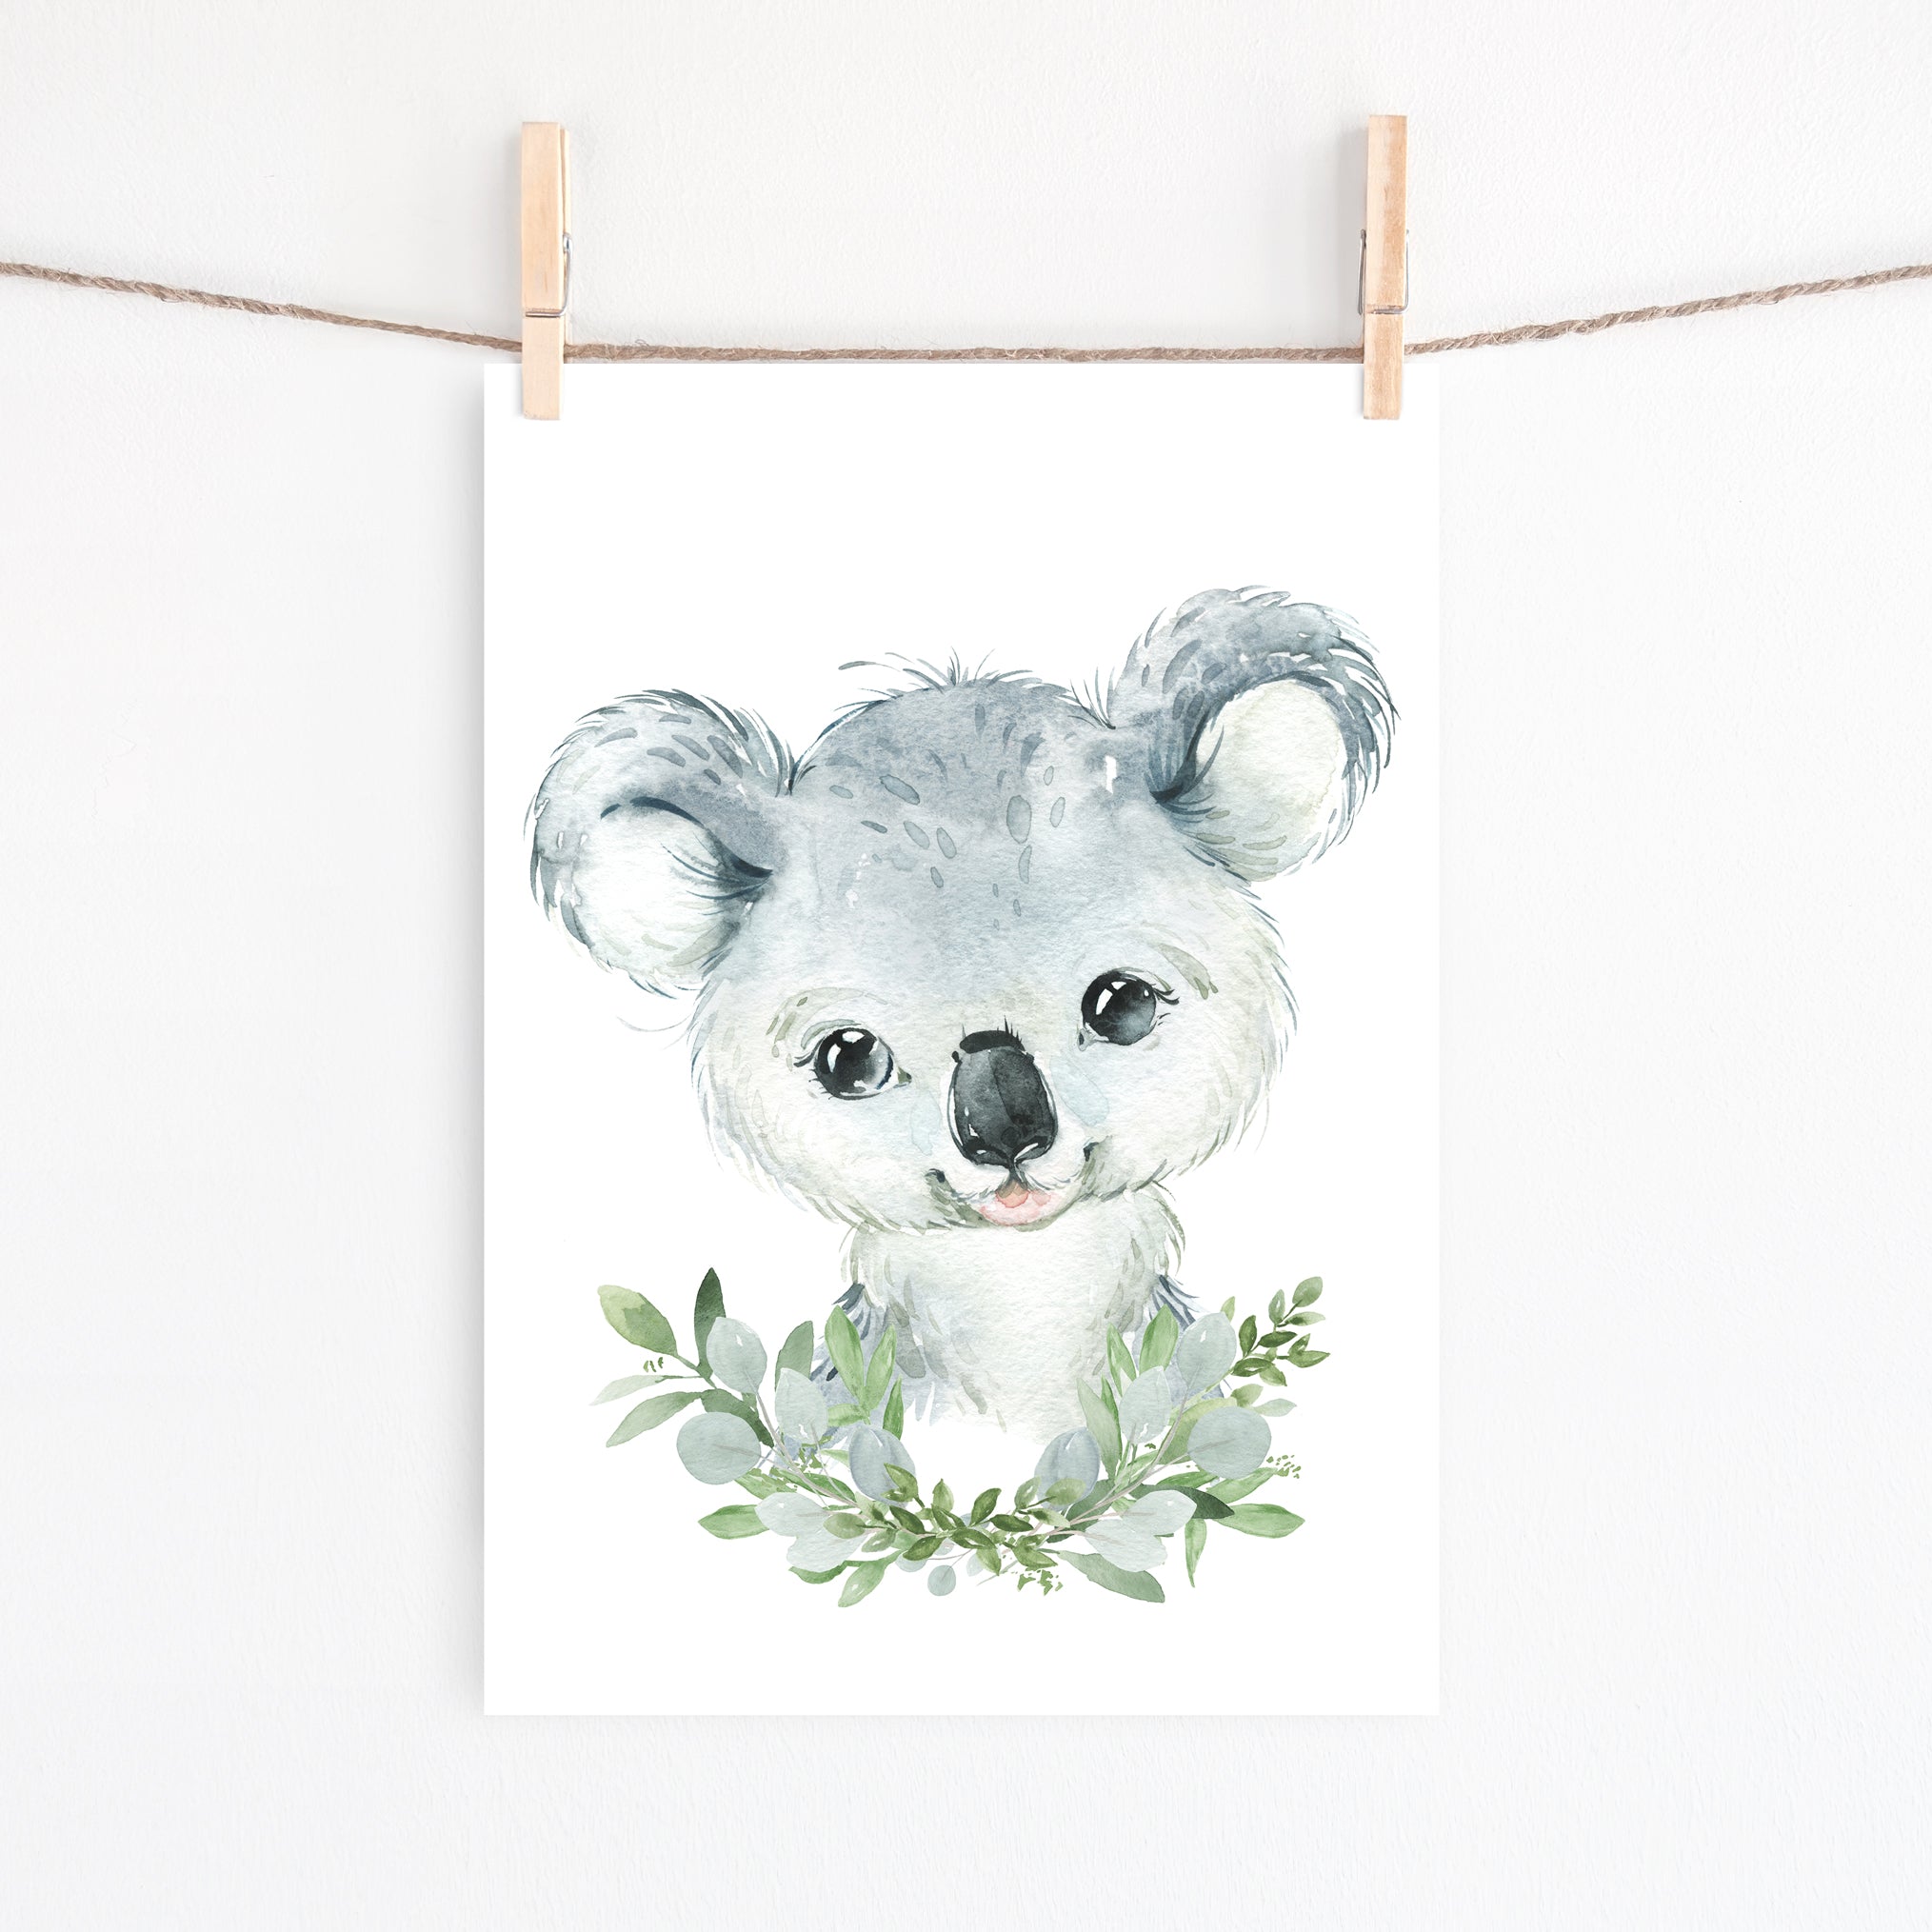 Wombat, Koala & Kangaroo Prints